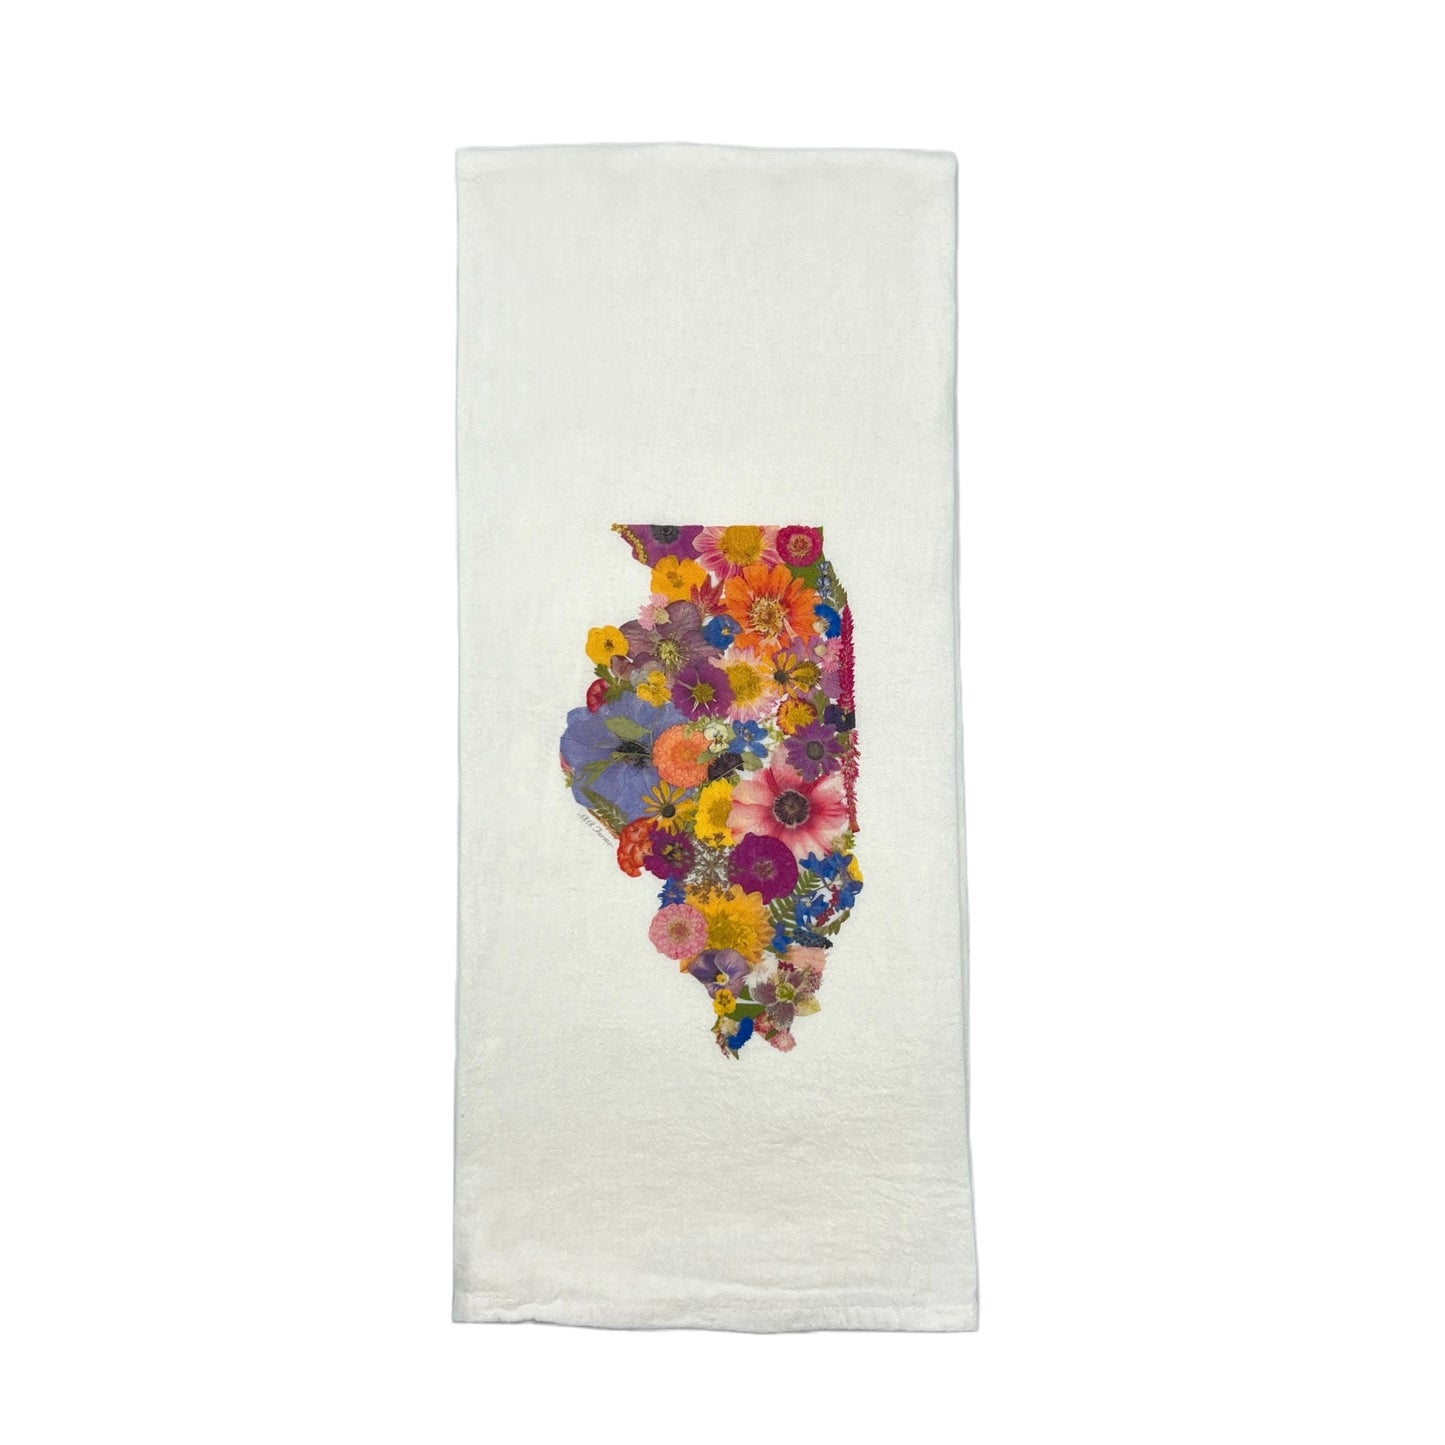 Illinois Themed Flour Sack Towel  - "Where I Bloom" Collection Towel 1818 Farms   